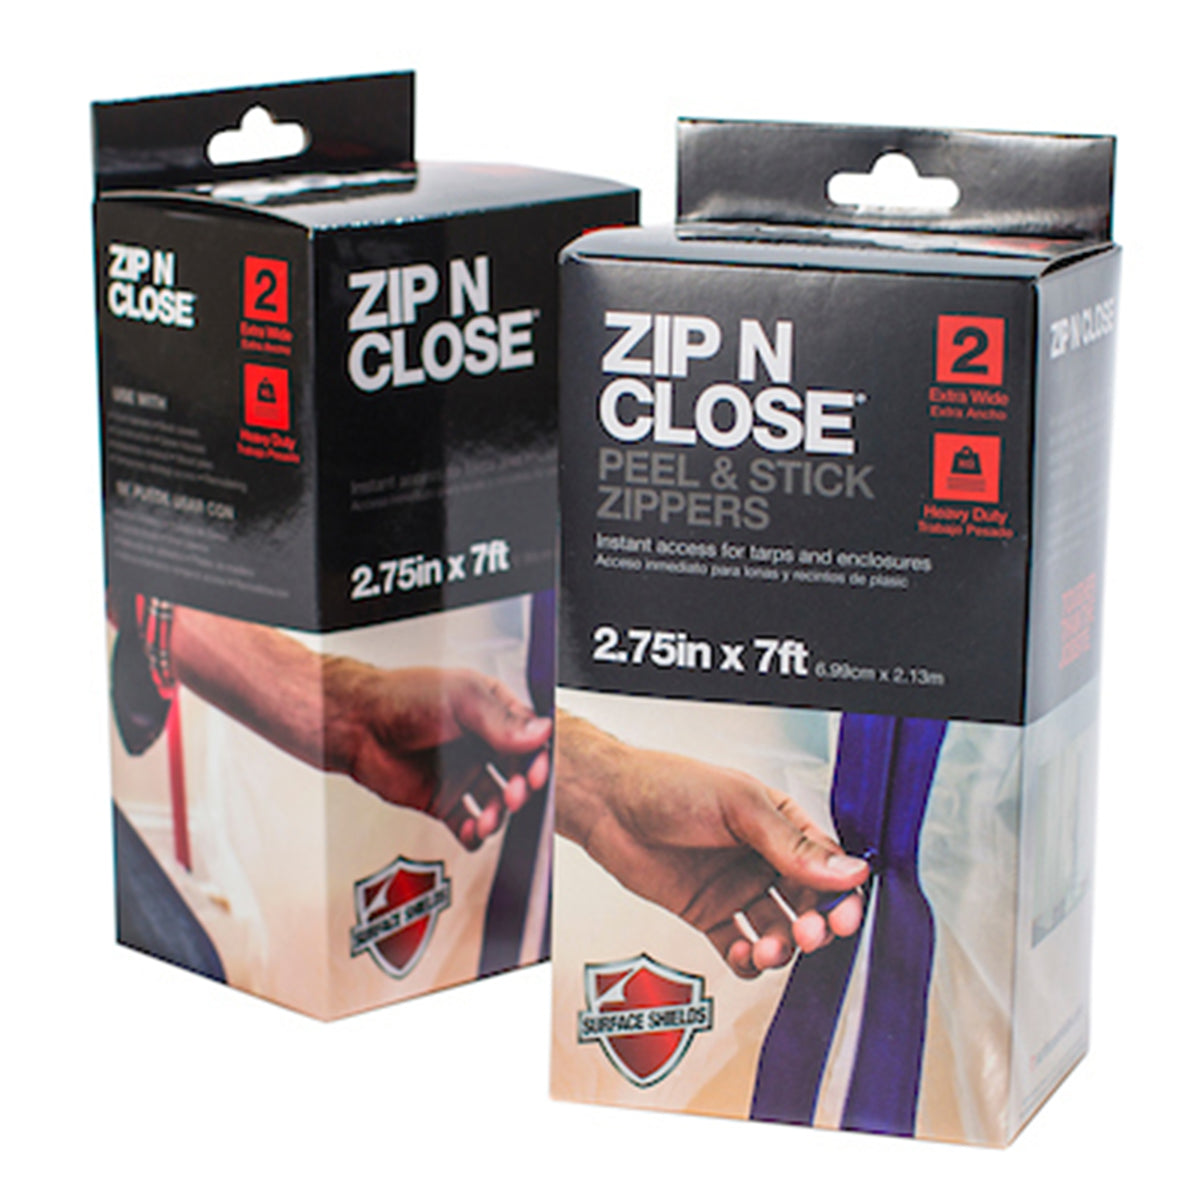 Zip n Close